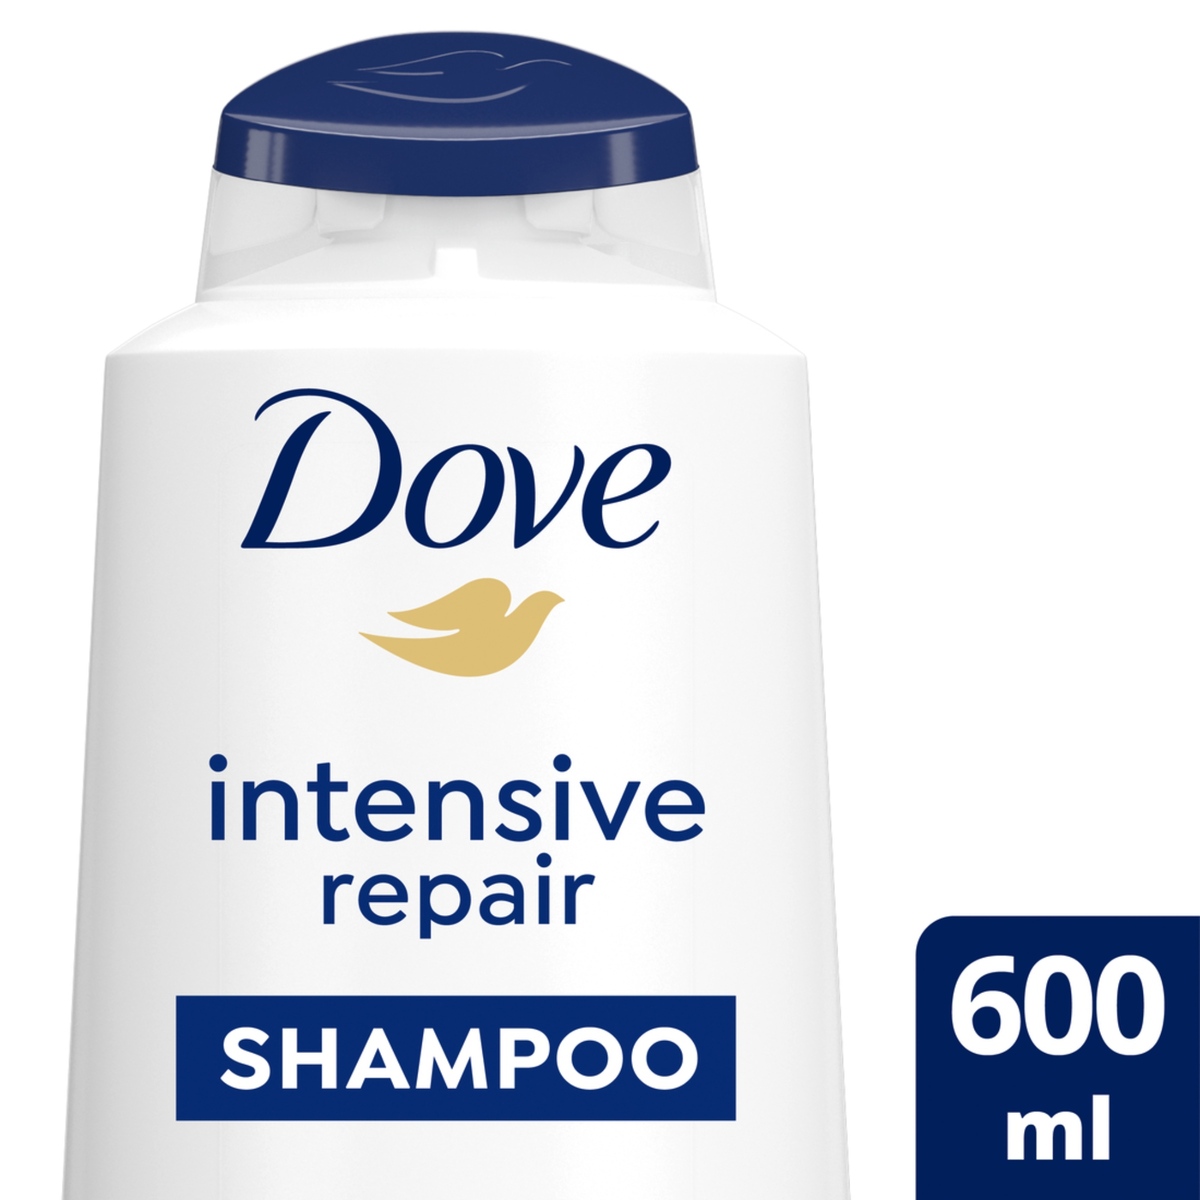 Dove Intensive Repair Shampoo 600 ml